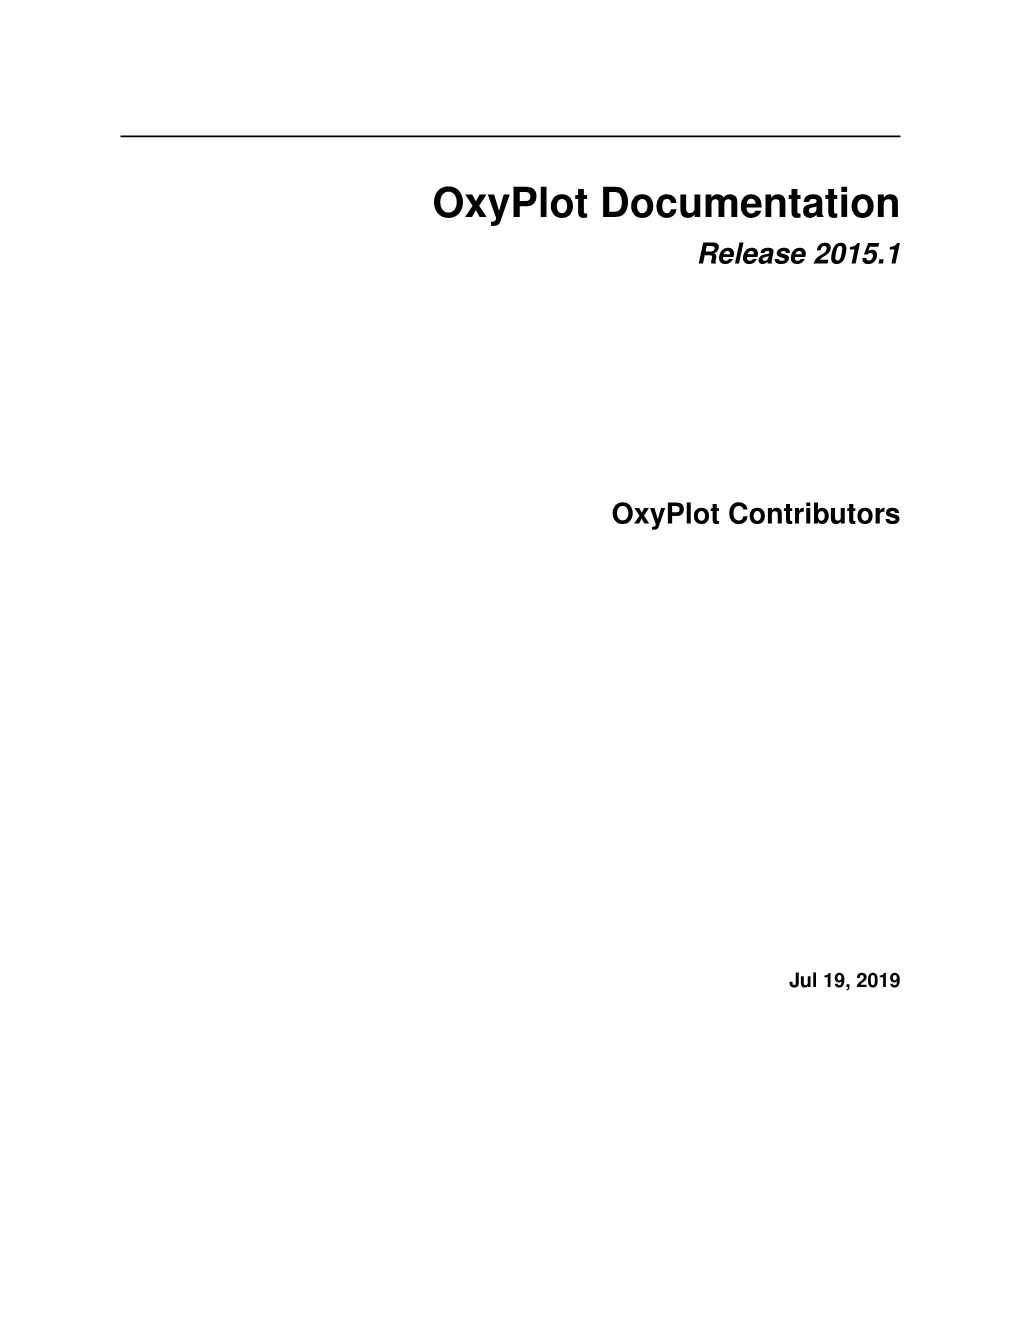 Oxyplot Documentation Release 2015.1